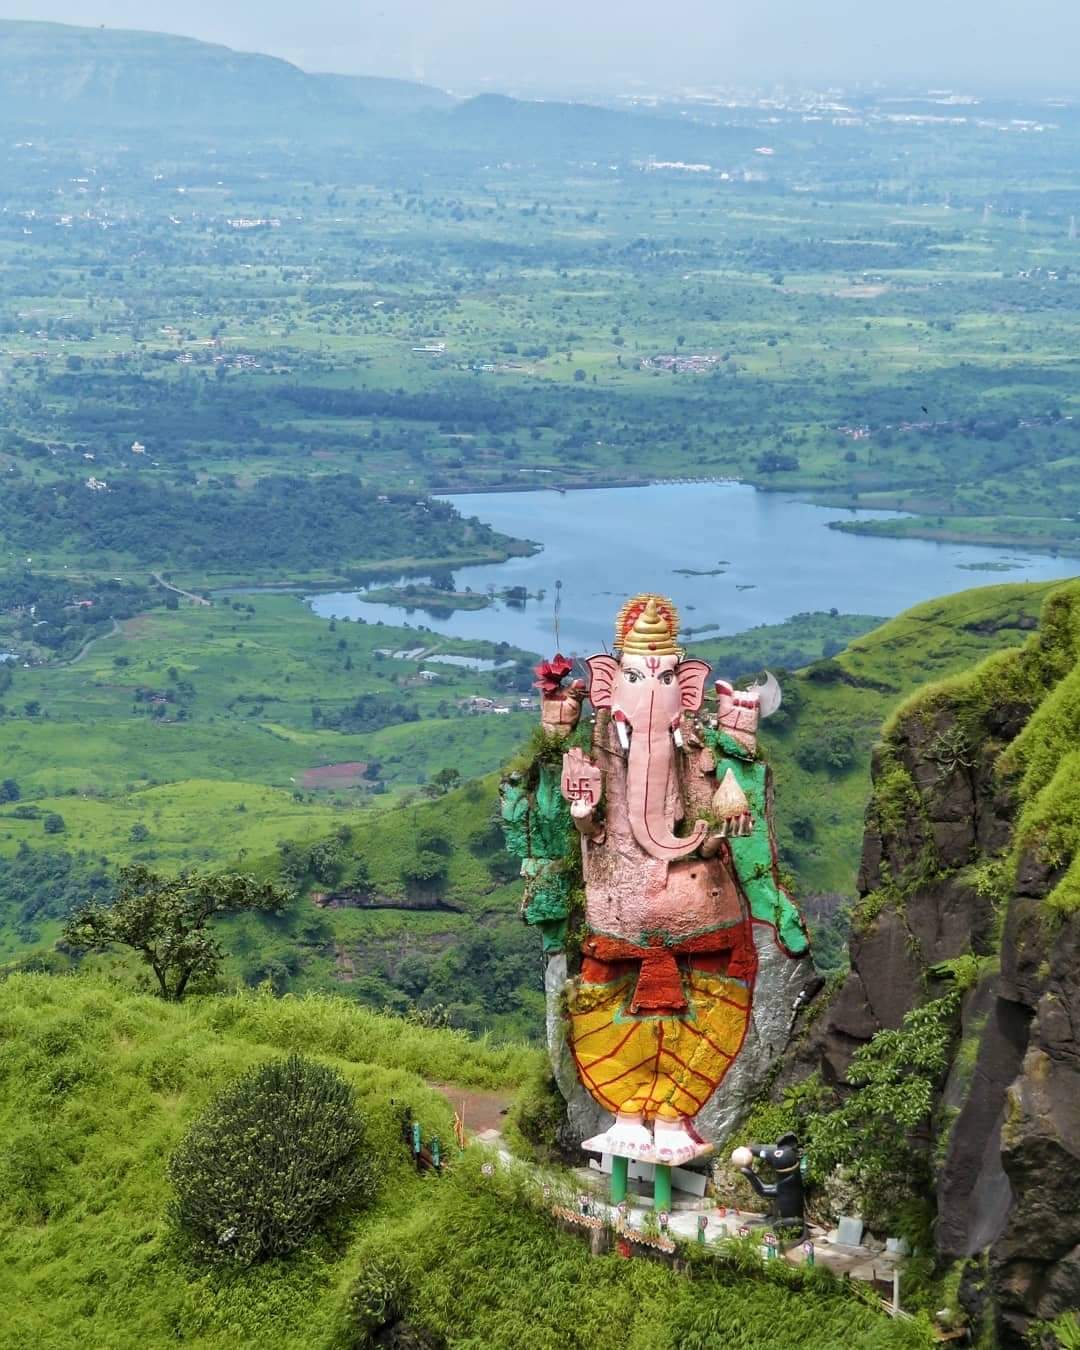 Monolithic Ganesh Idol Perched on a Hill near Mumbai